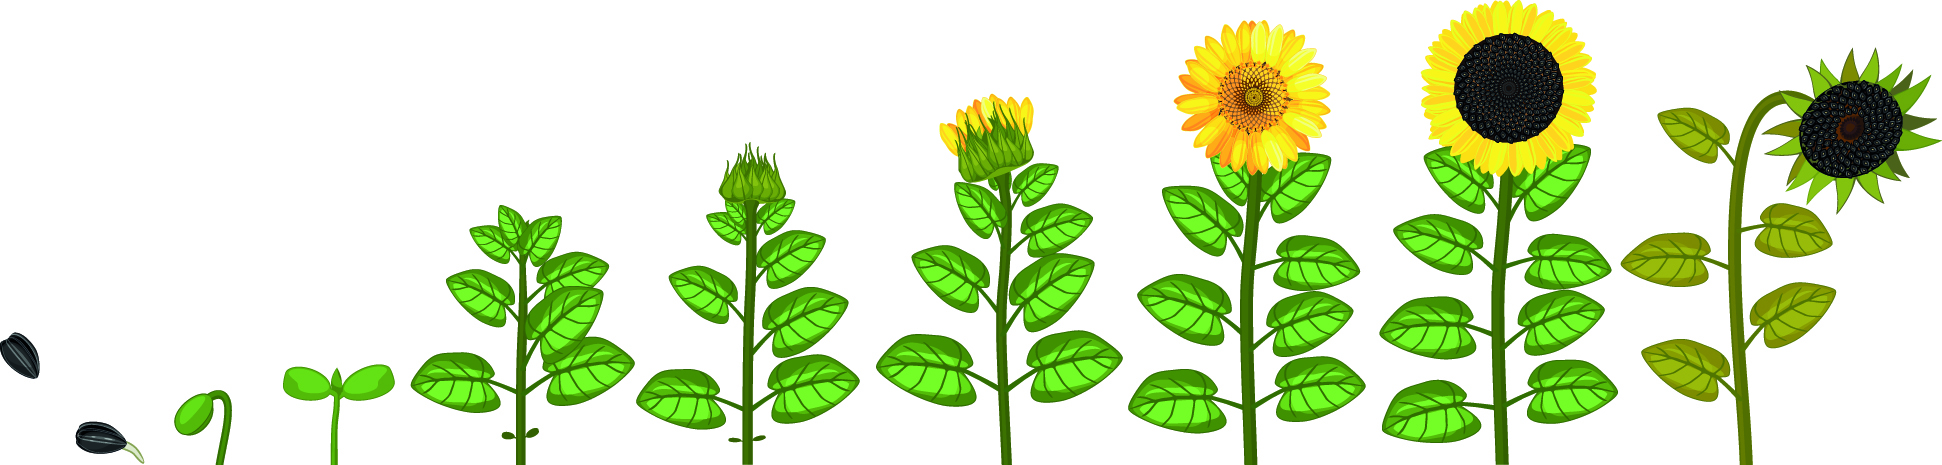 Sunflowers Growing